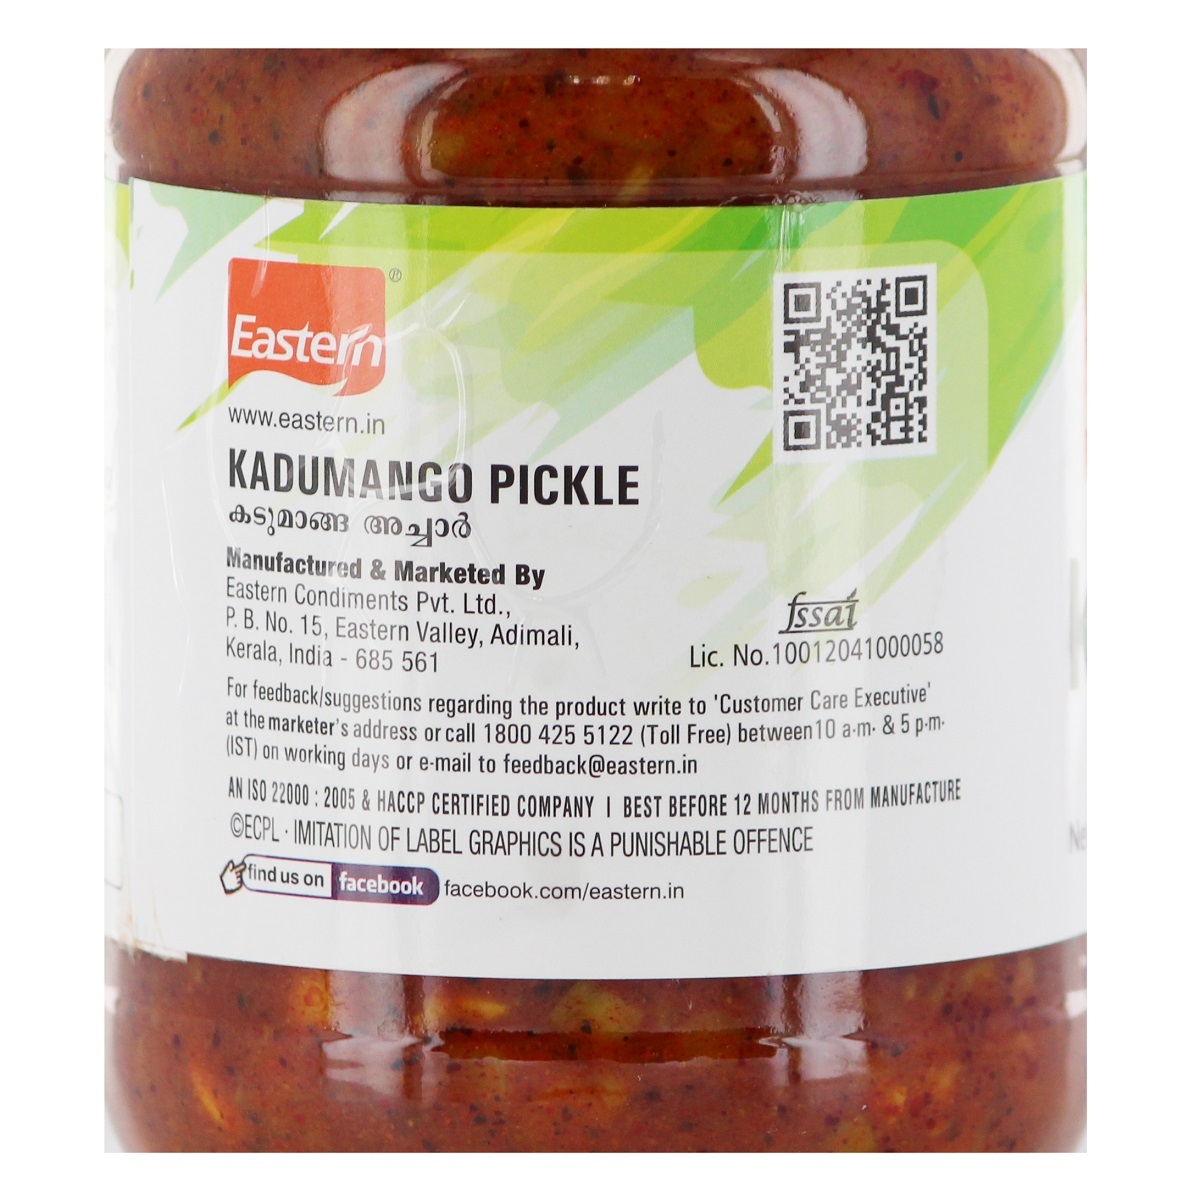 Eastern Kadu Mango Pickle 400g